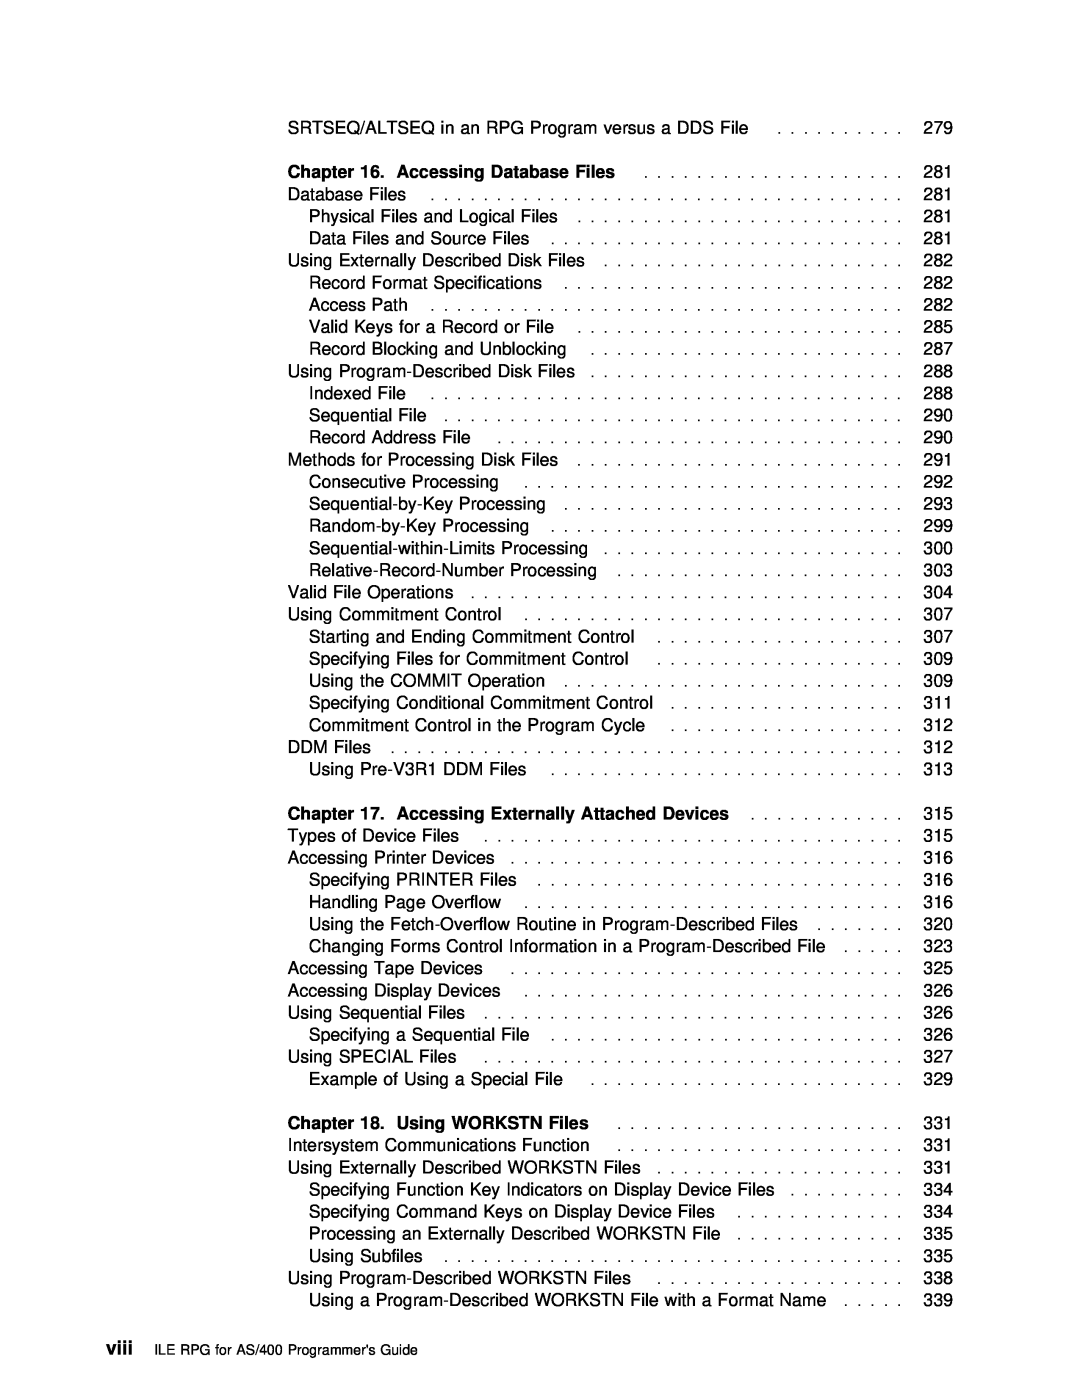 IBM AS/400 manual Files 